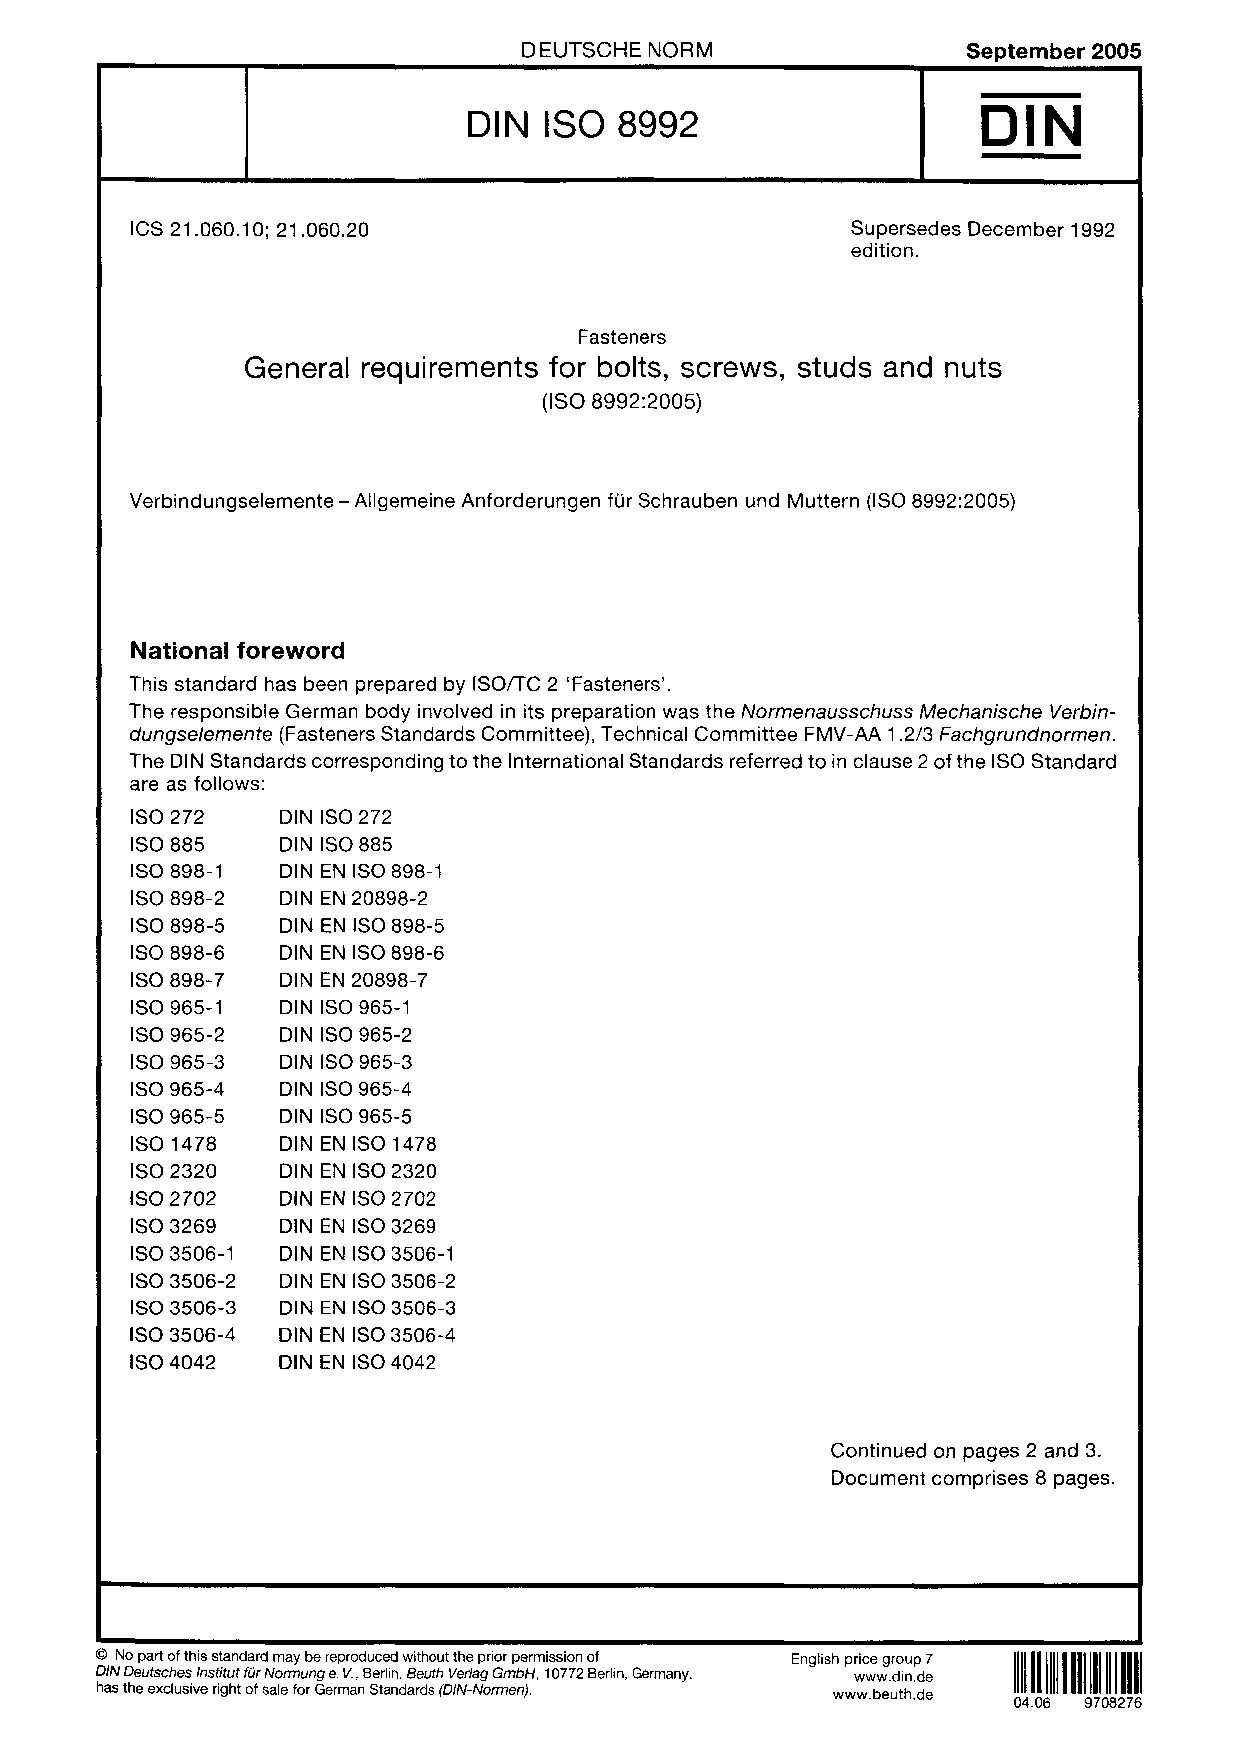 DIN ISO 8992:2005-09